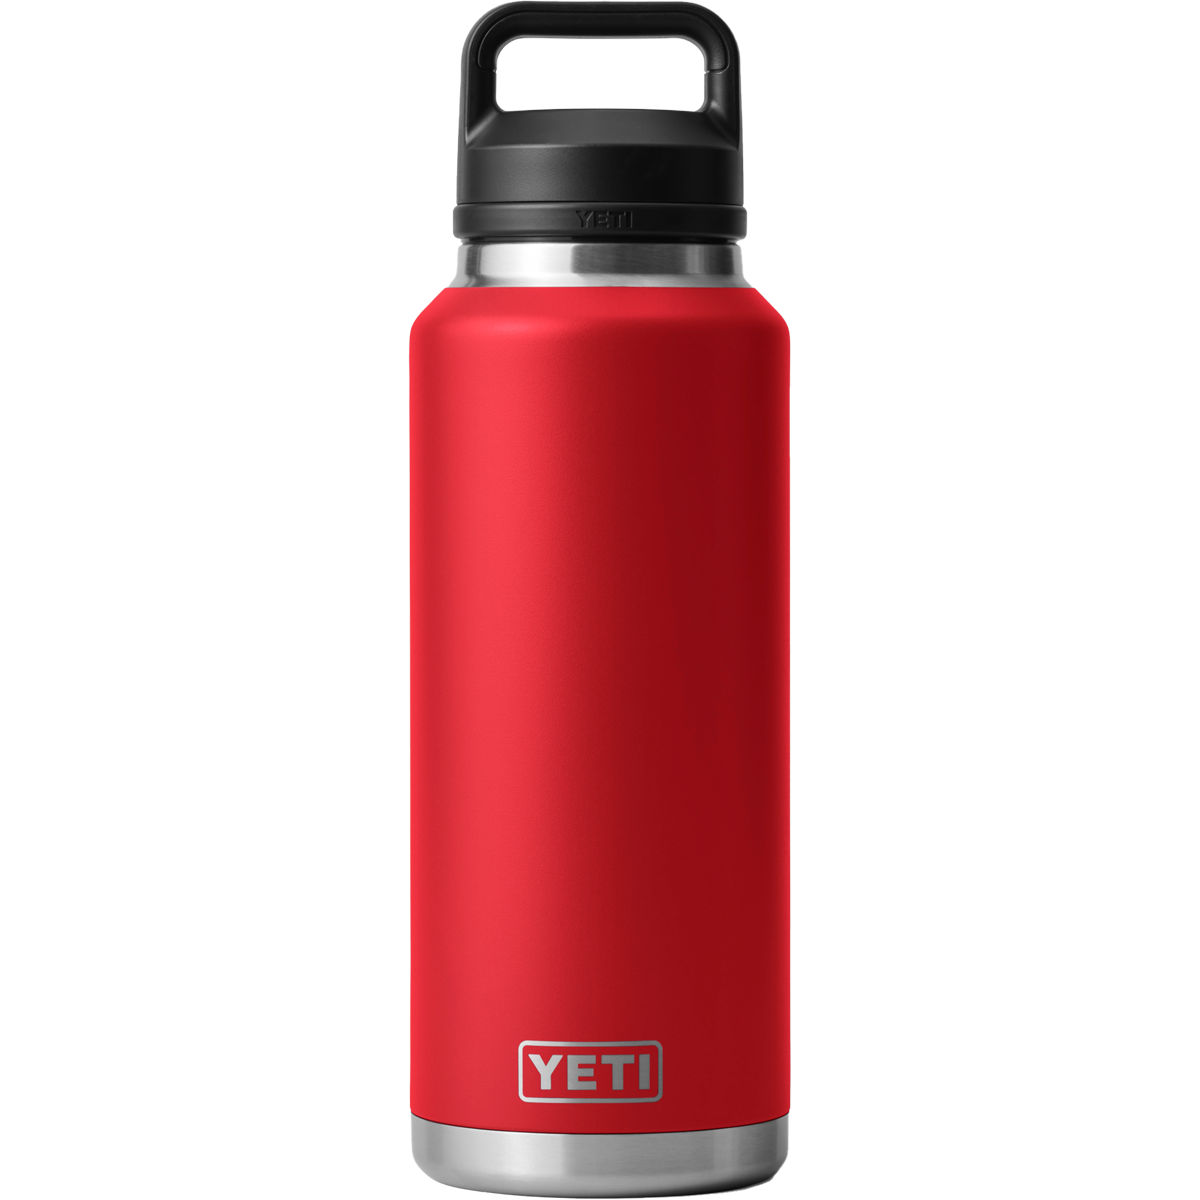 Yeti Rambler Water Bottle Review